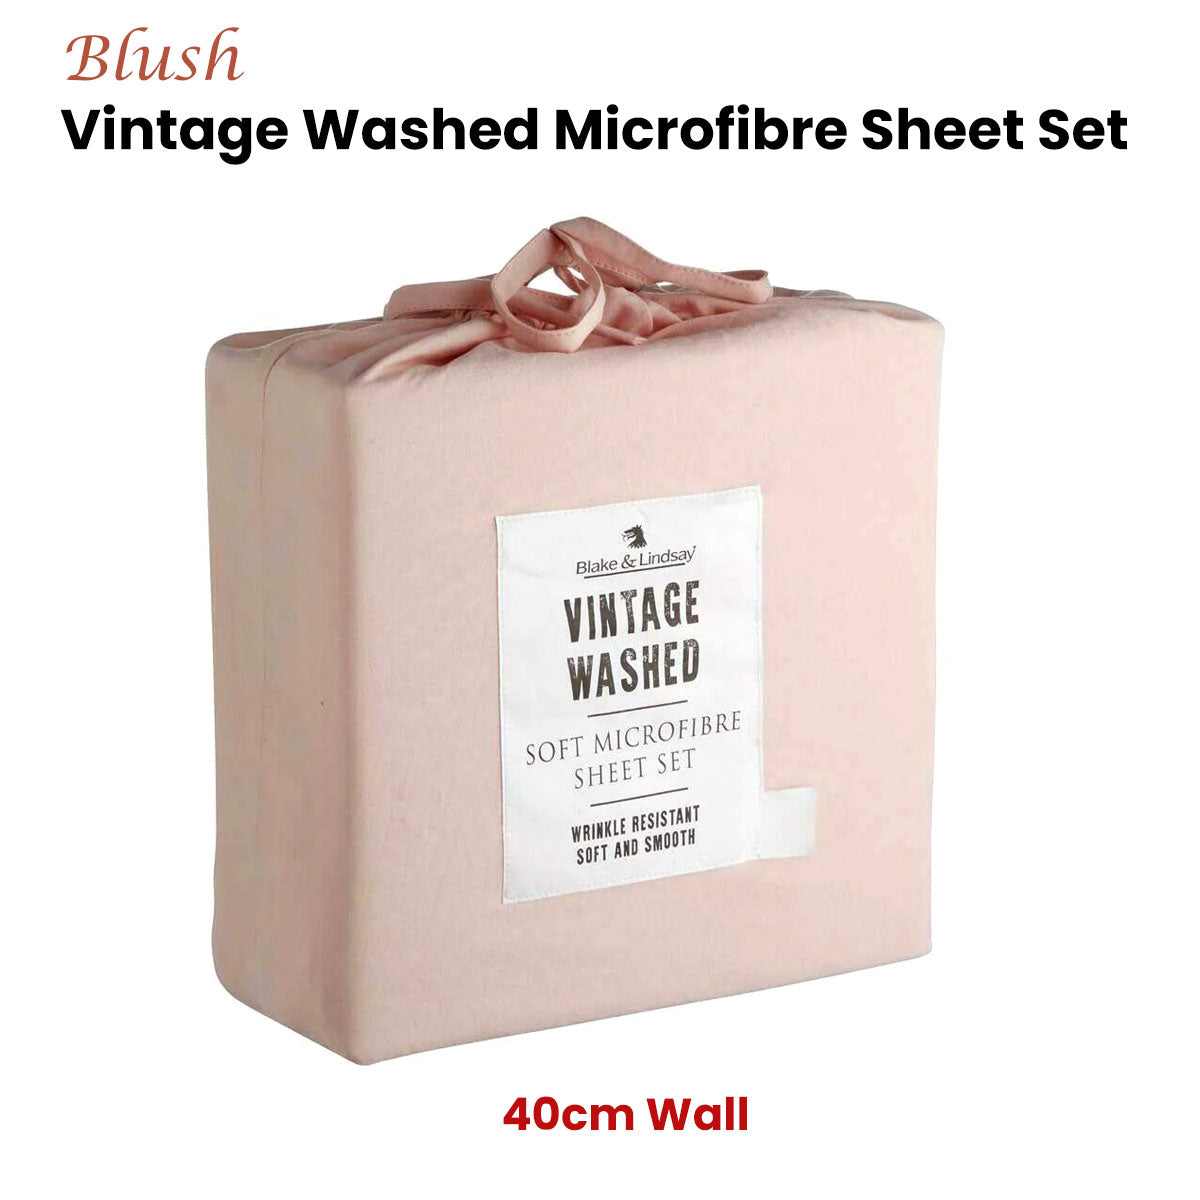 Blake & Lindsay Blush Vintage Washed Microfibre Sheet Set 40cm Wall King